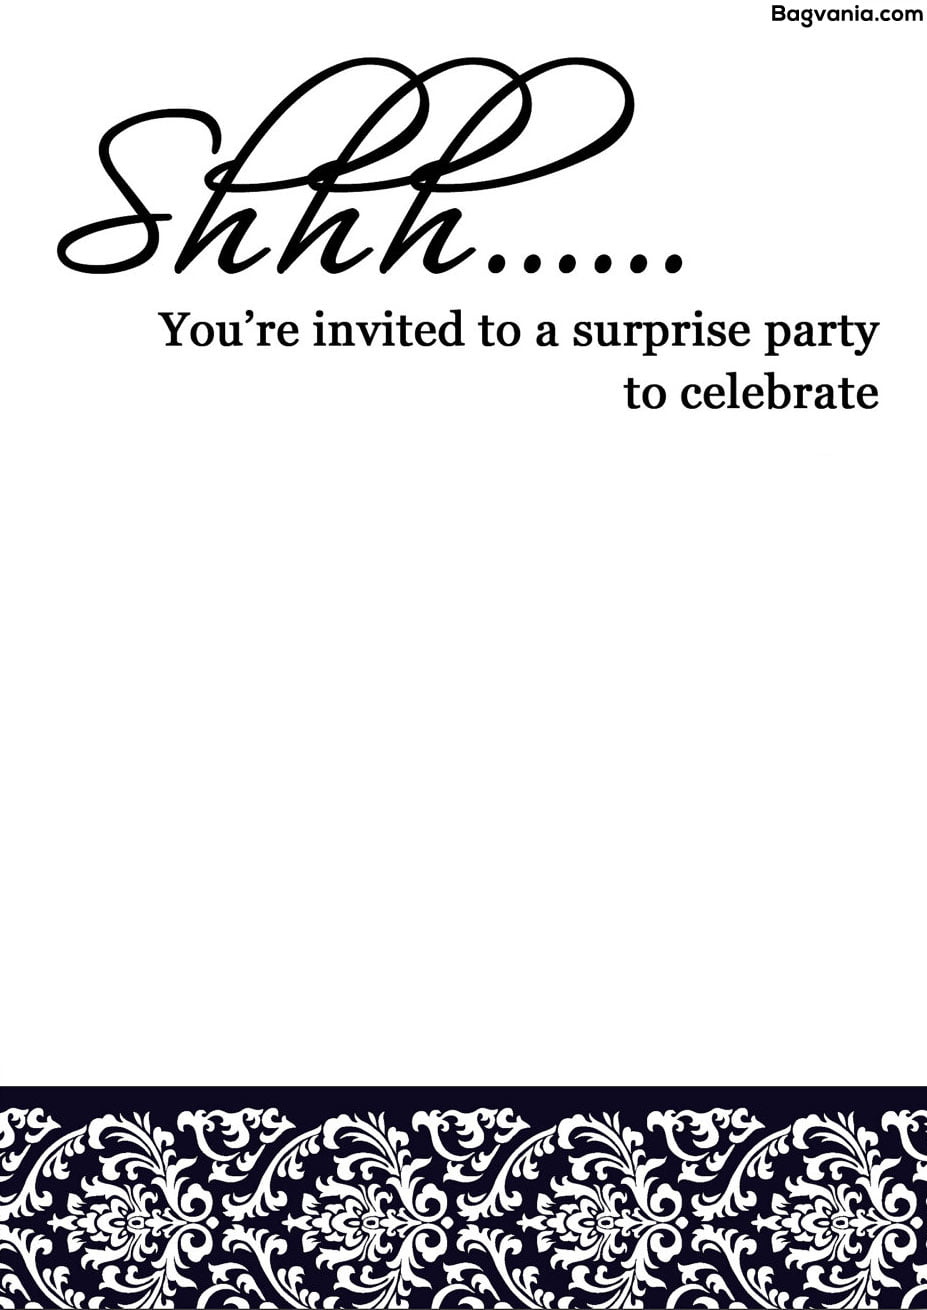 Free Surprise Party Invitation Templates Printable